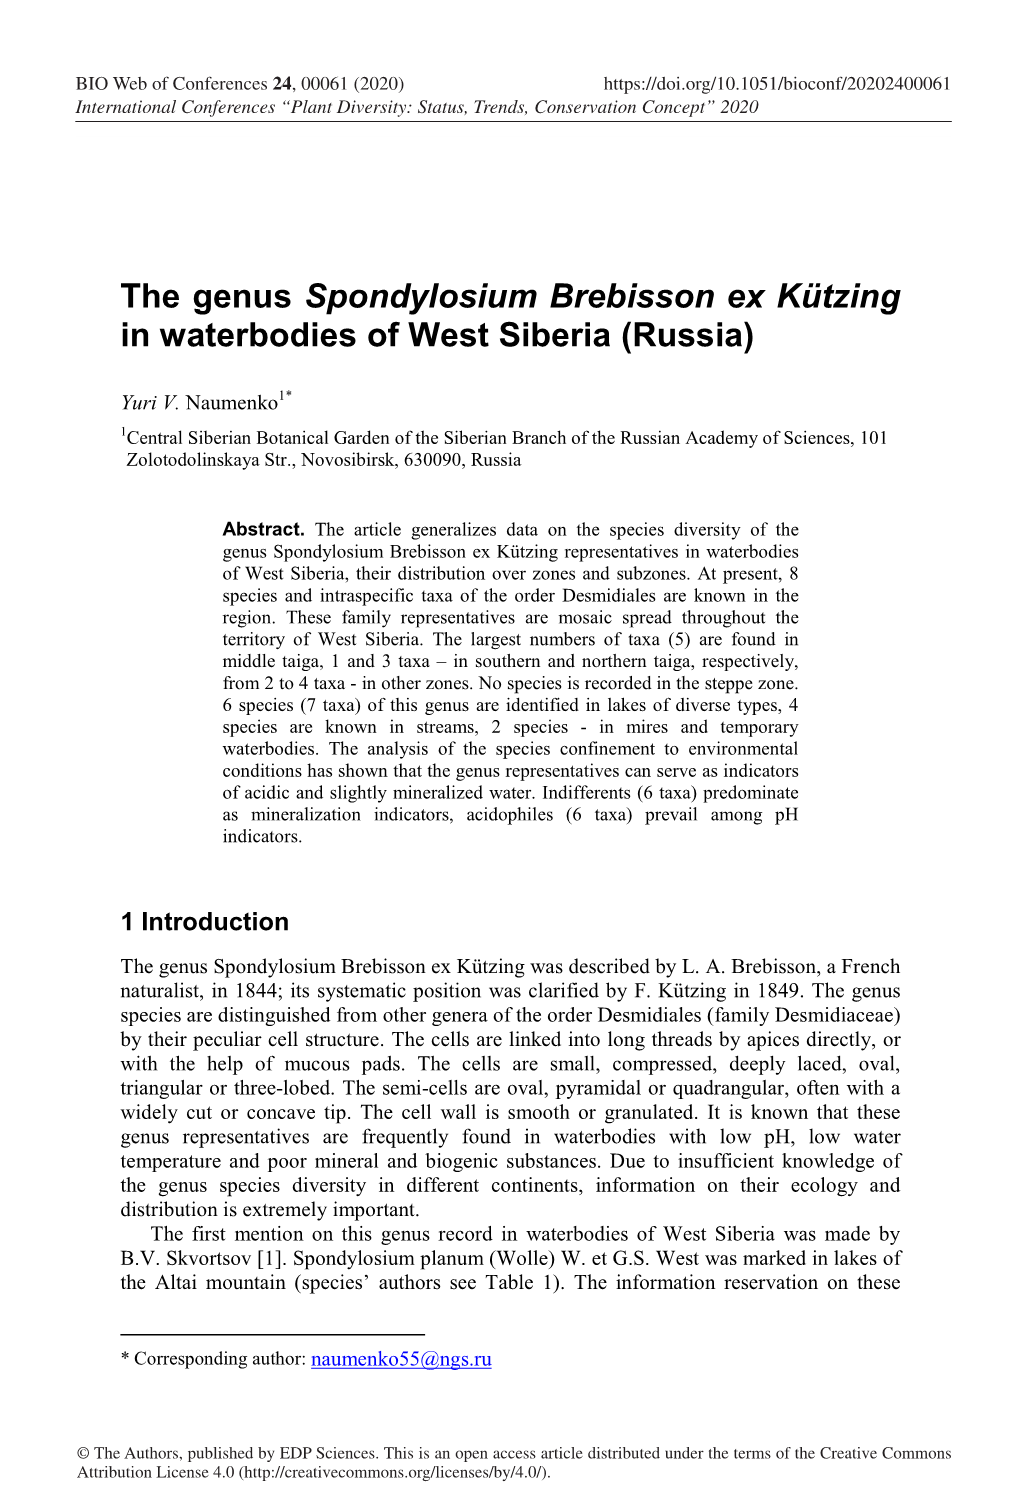 The Genus Spondylosium Brebisson Ex Kützing in Waterbodies of West Siberia (Russia)